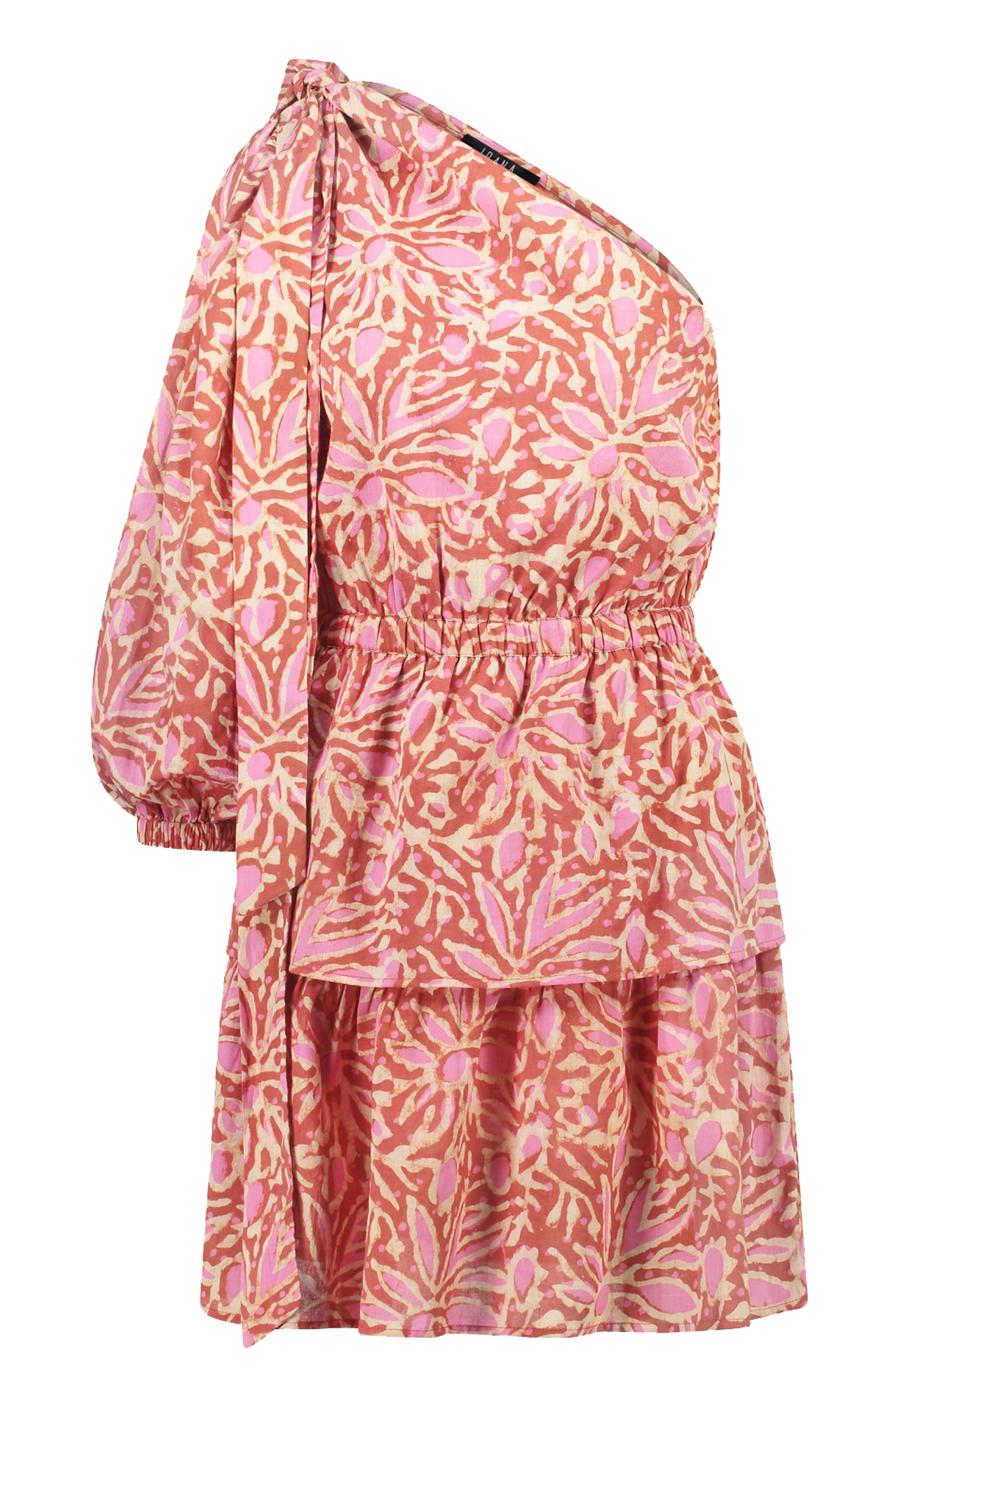 Ibana Katoenen one-shoulder jurk Daffi roze